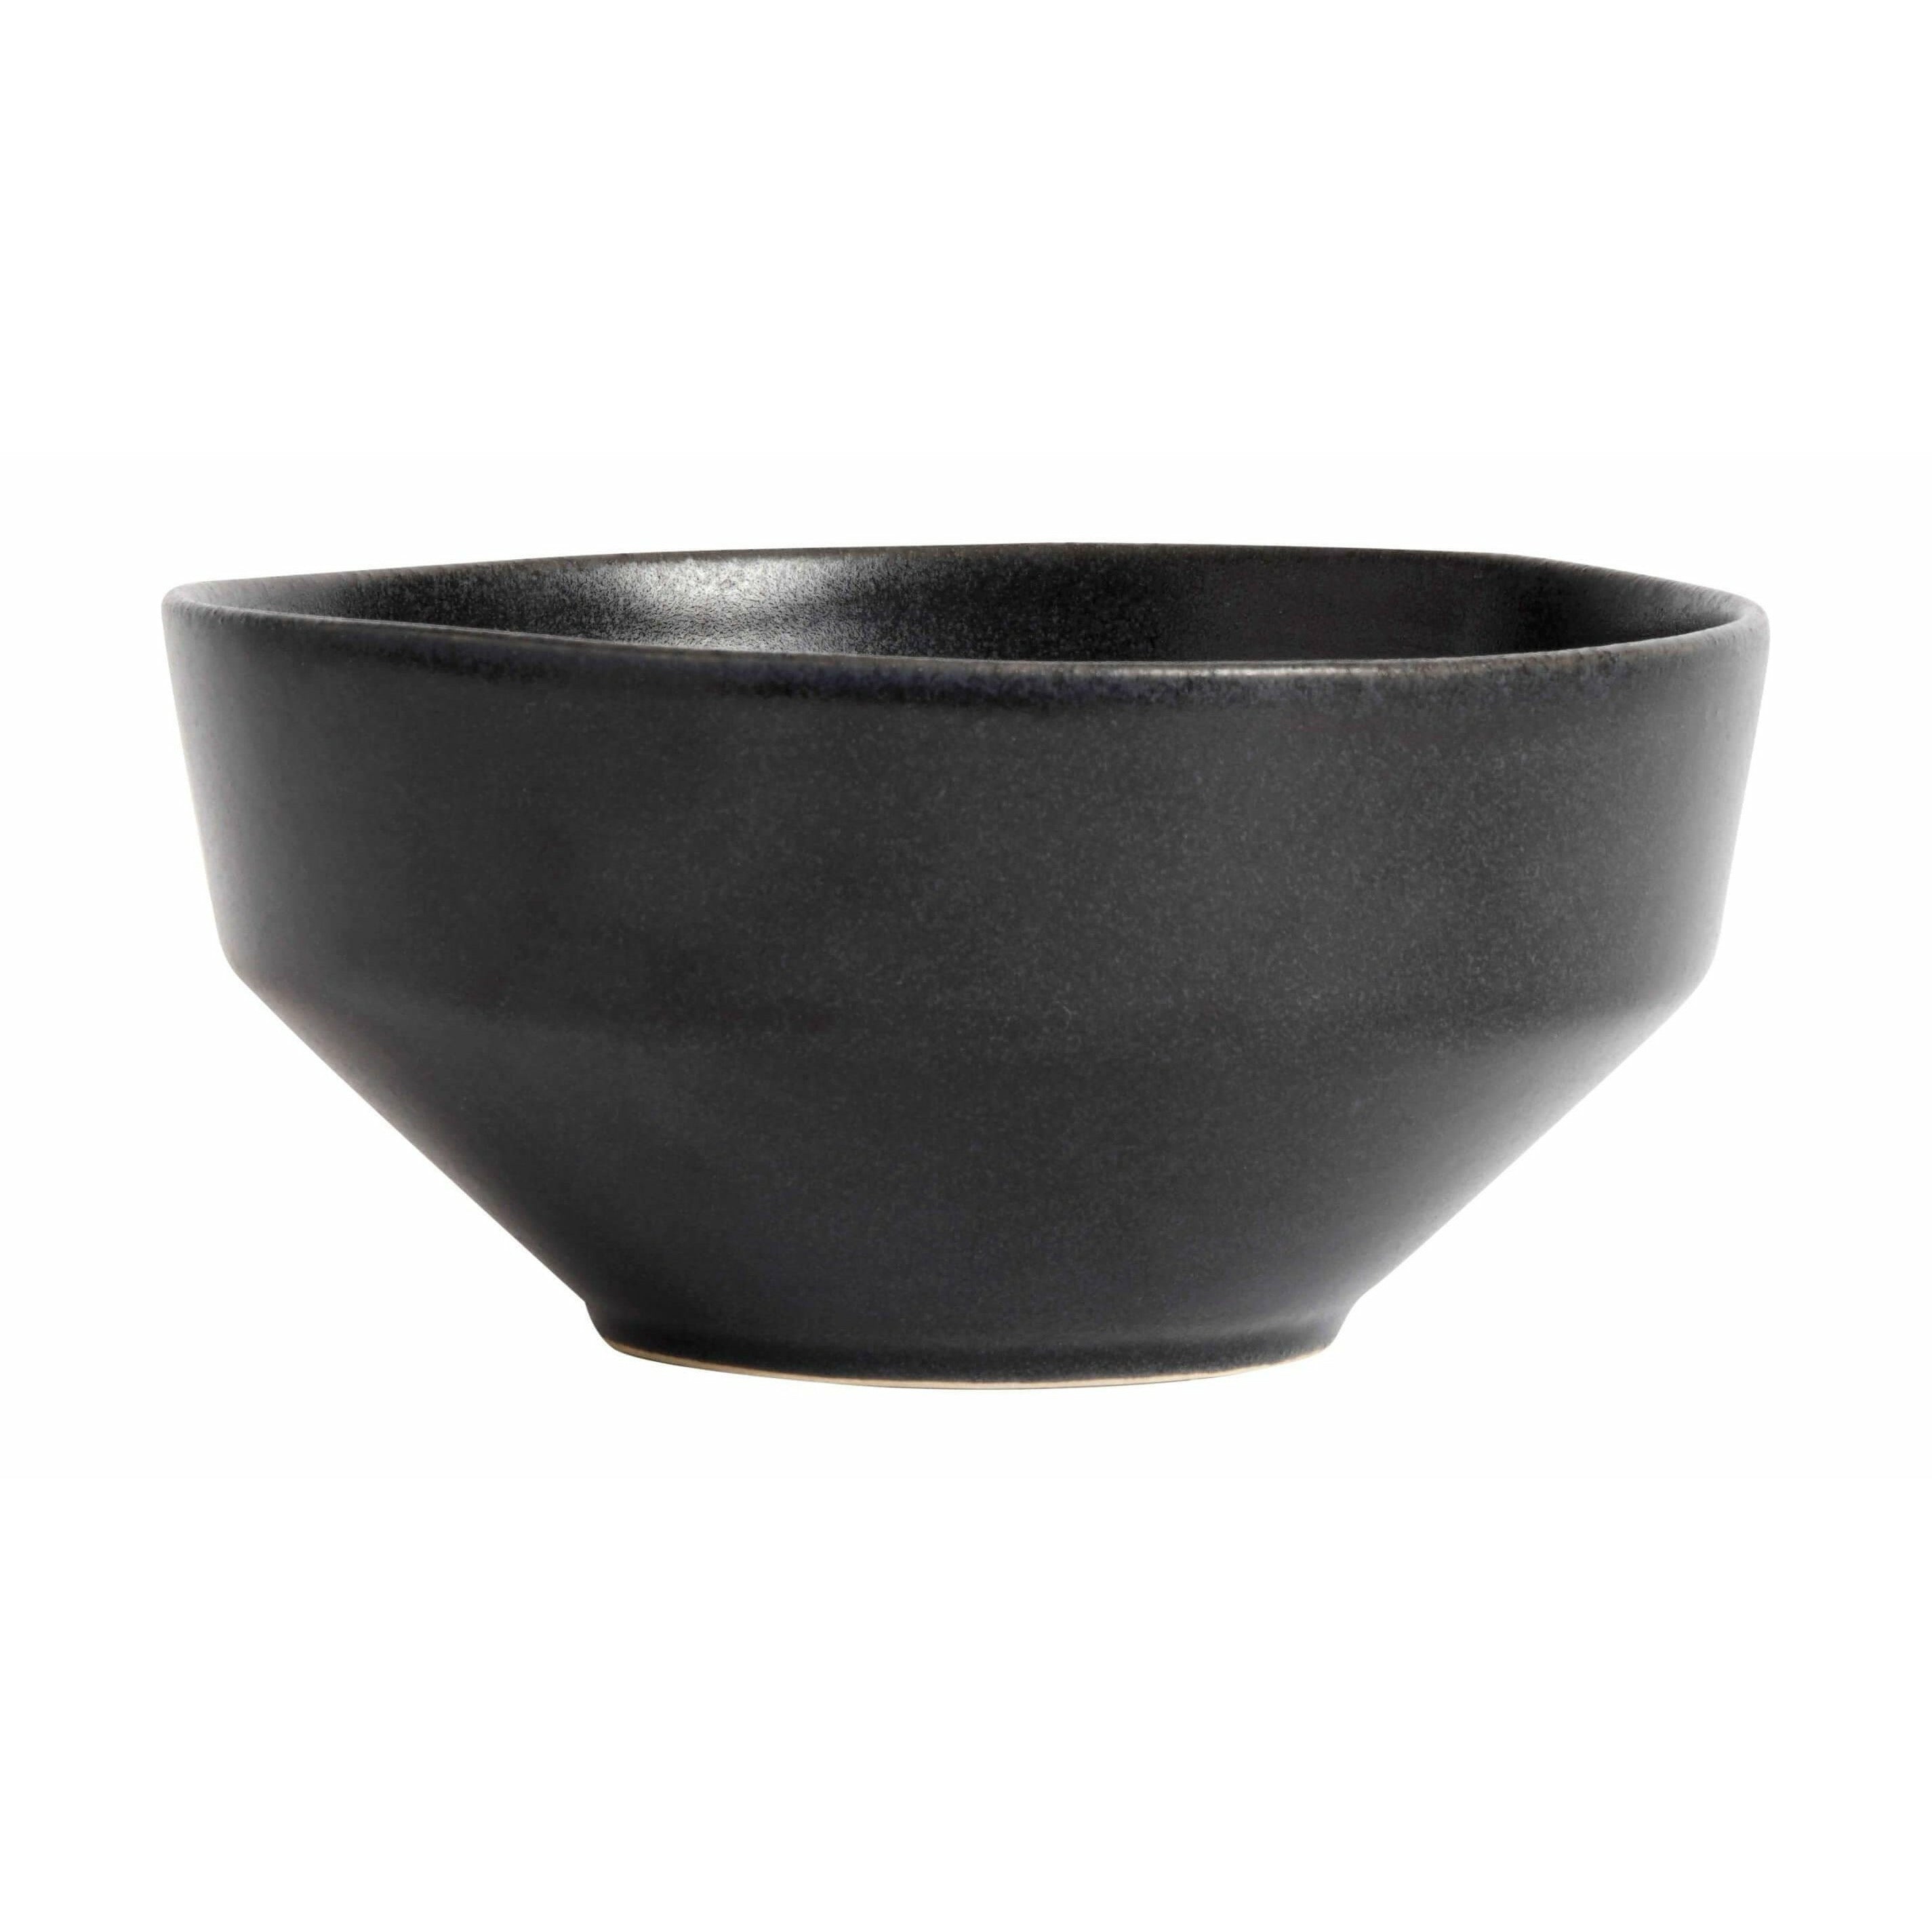 Muubs Ceto Muesli Bowl nero, 15,5 cm